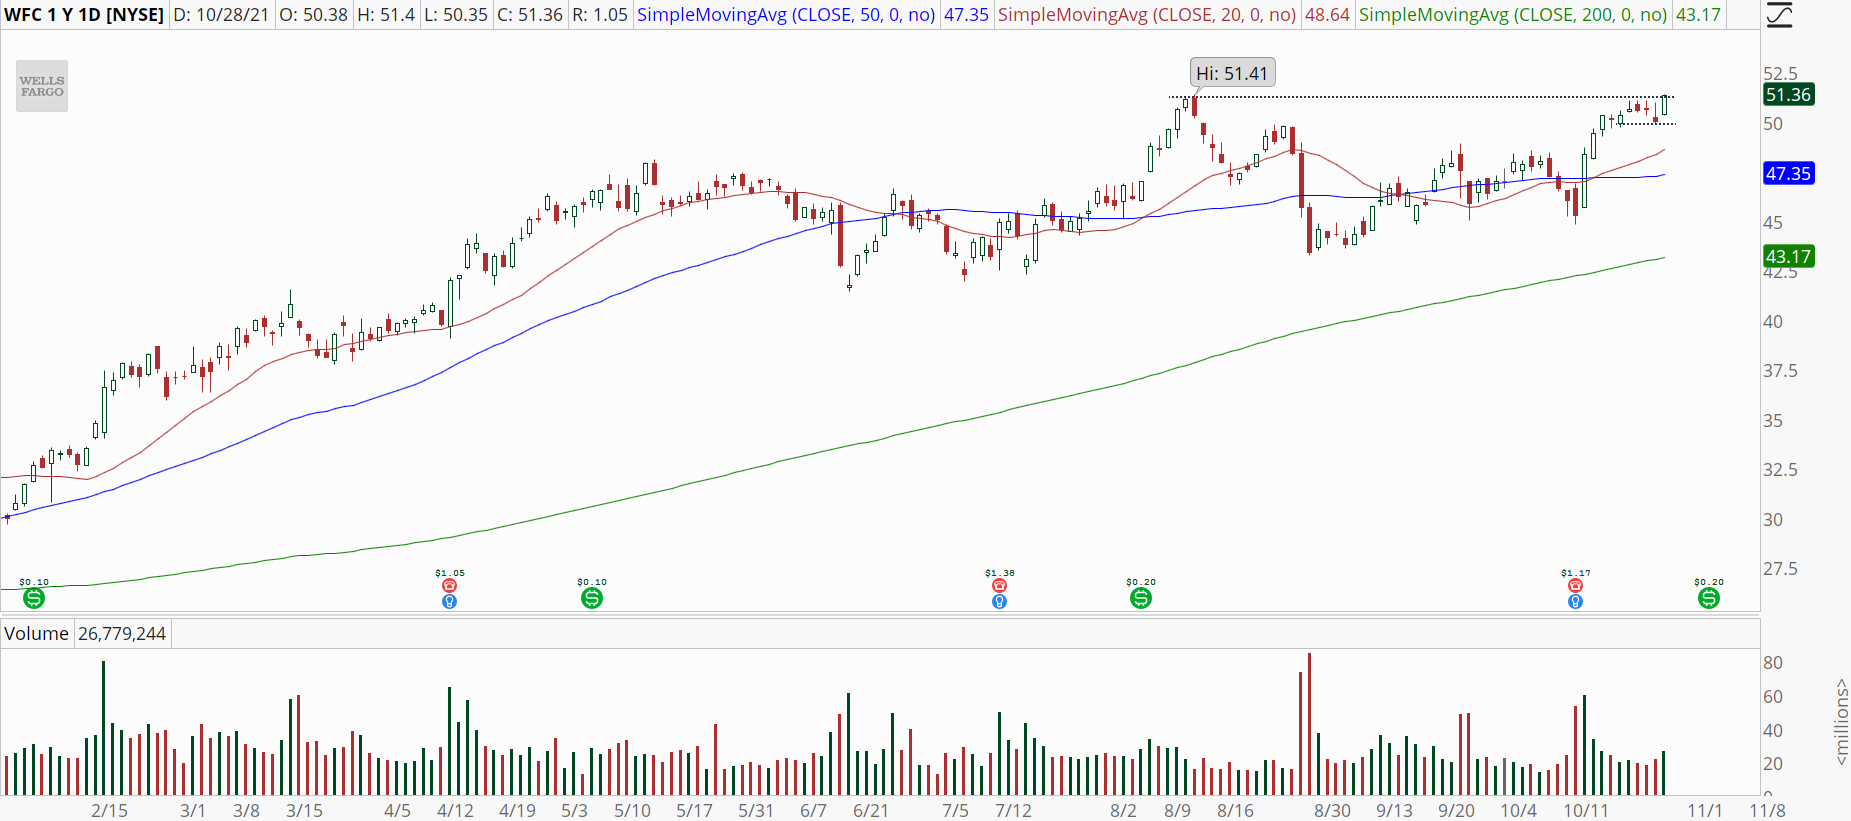 Wells Fargo (WFC) stock chart with bullish breakout